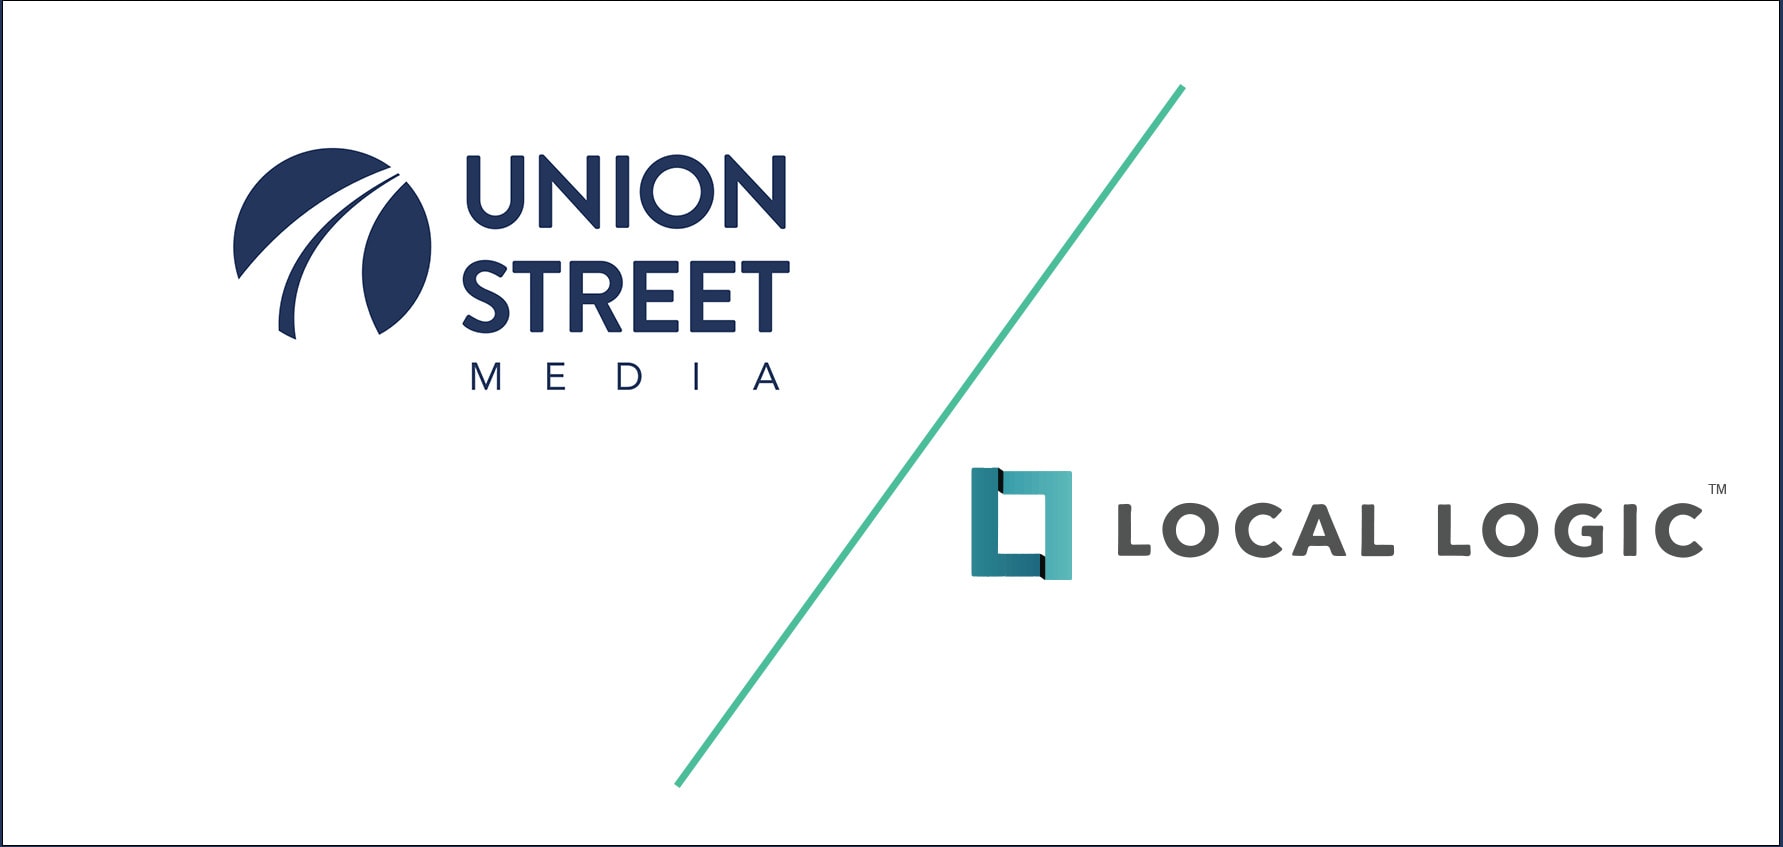 union street media and local logic partnership